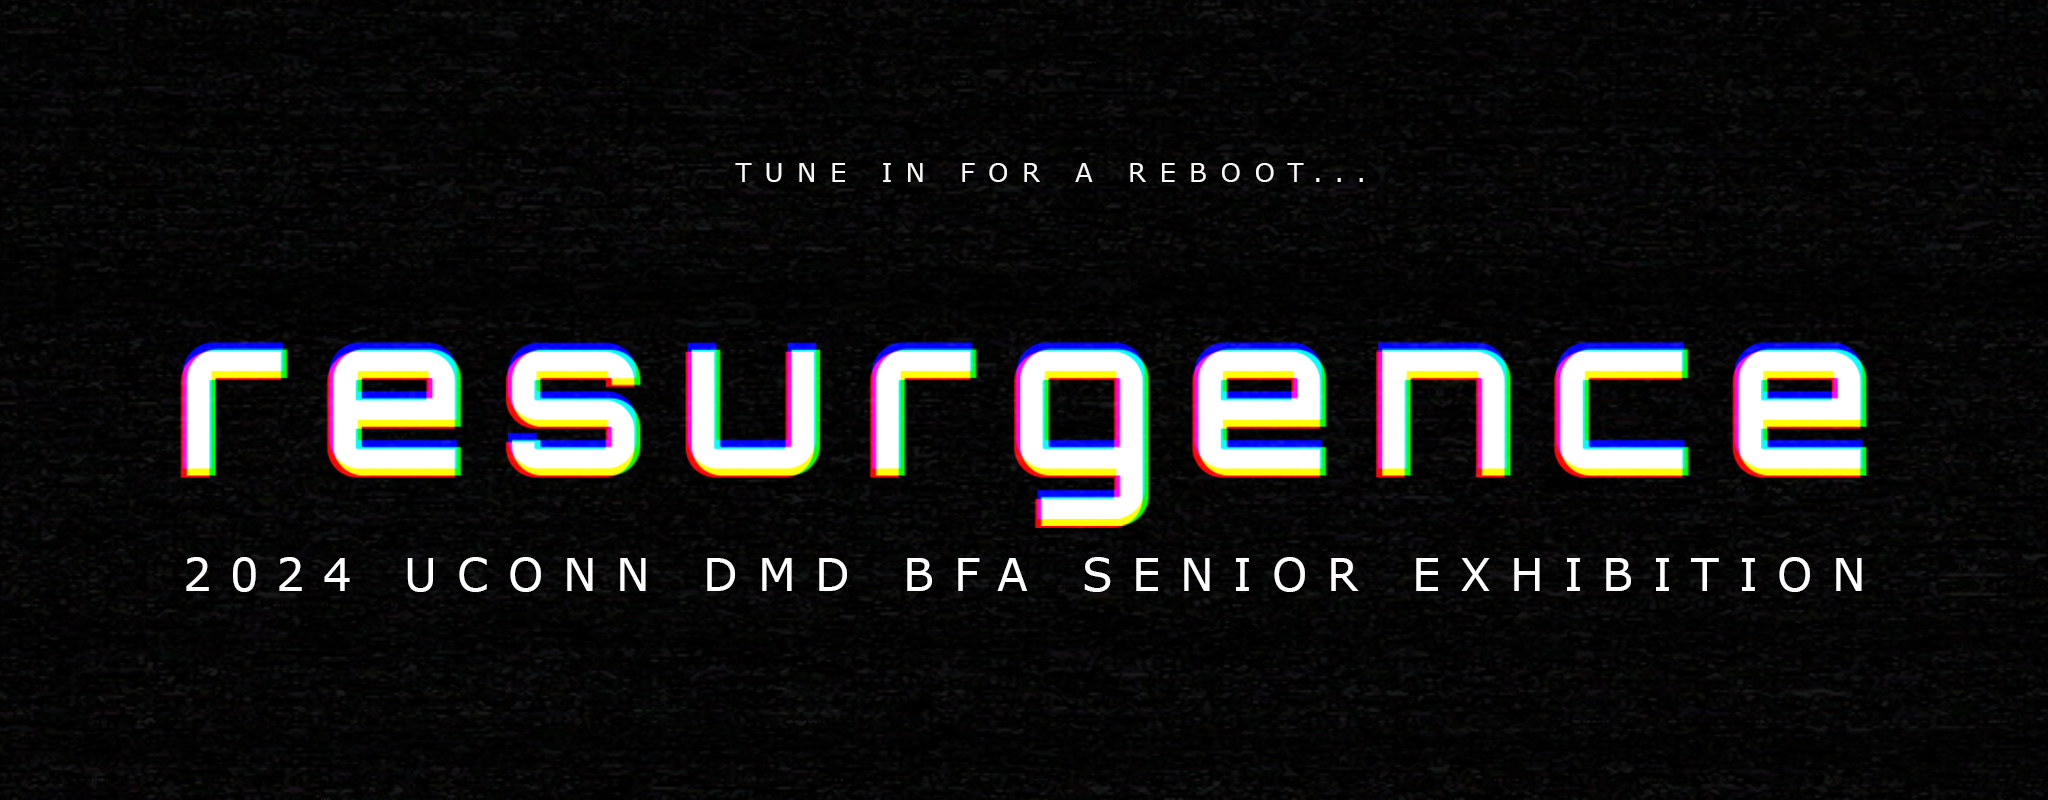 text that says "resurgence 2024 DMD BFA Senior Exhibition"